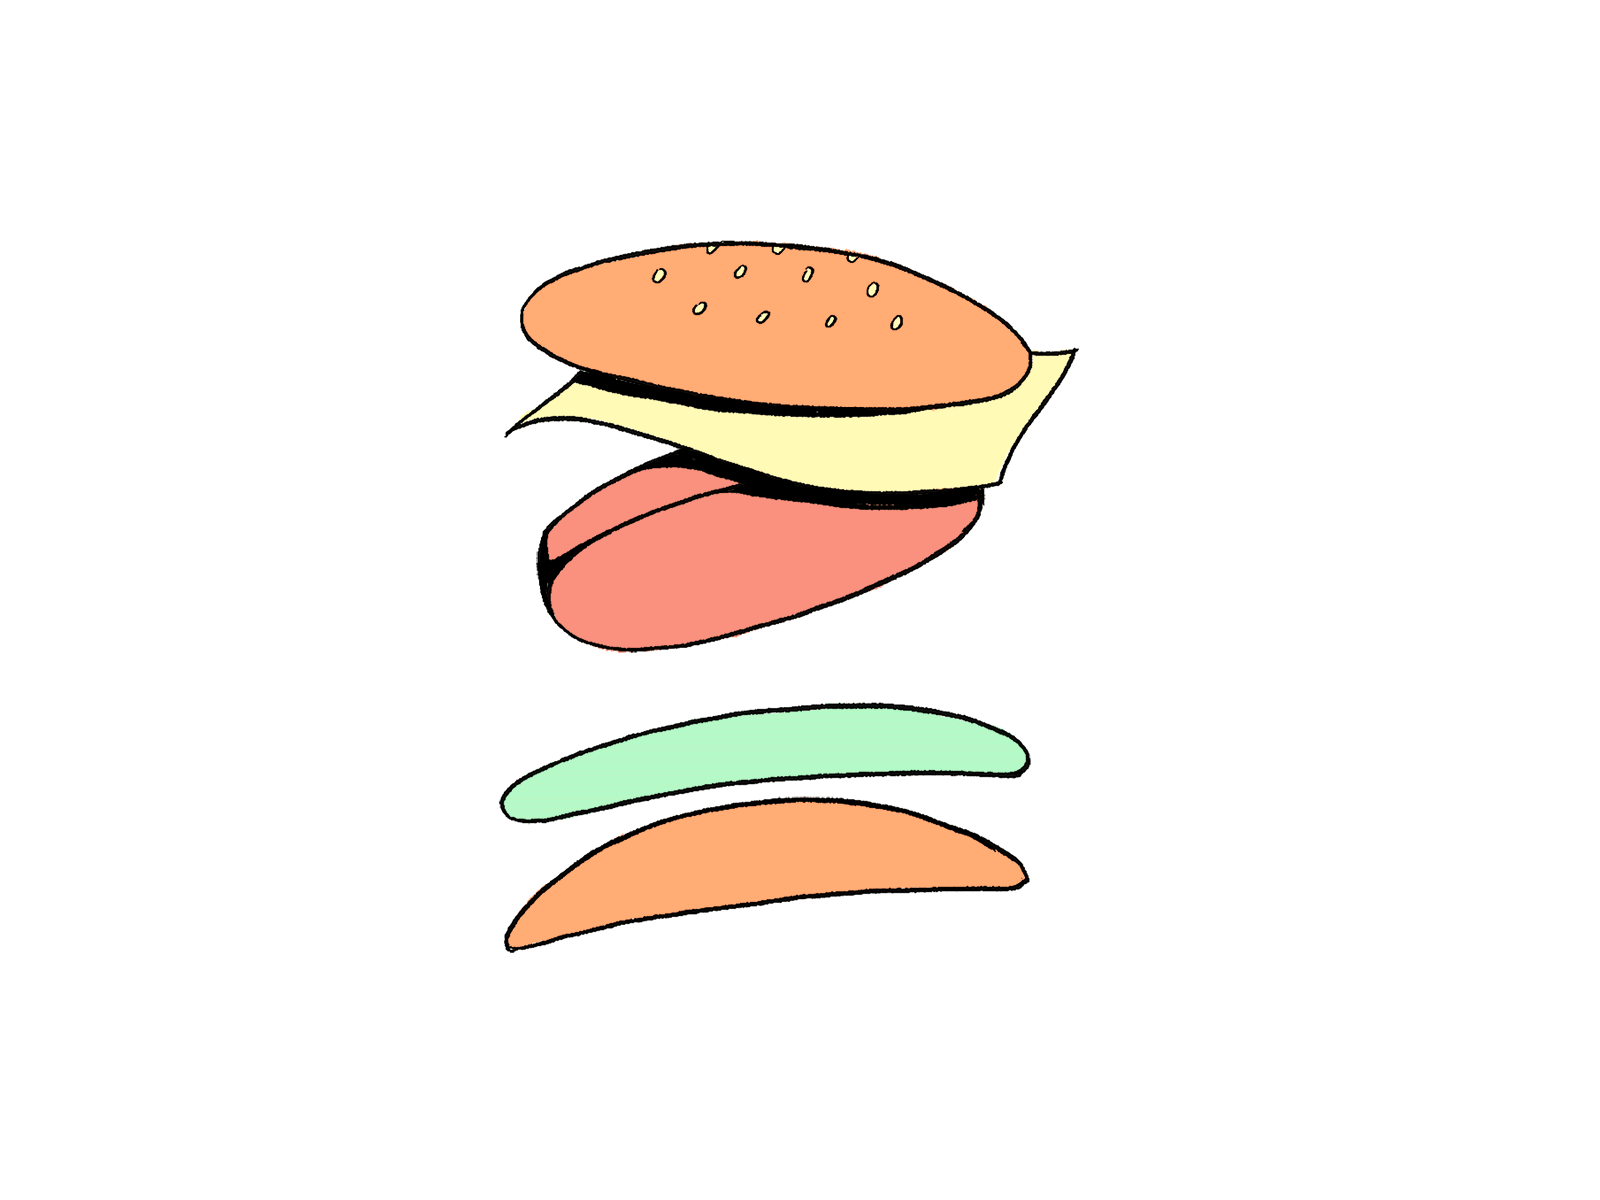 Flying Burger detail